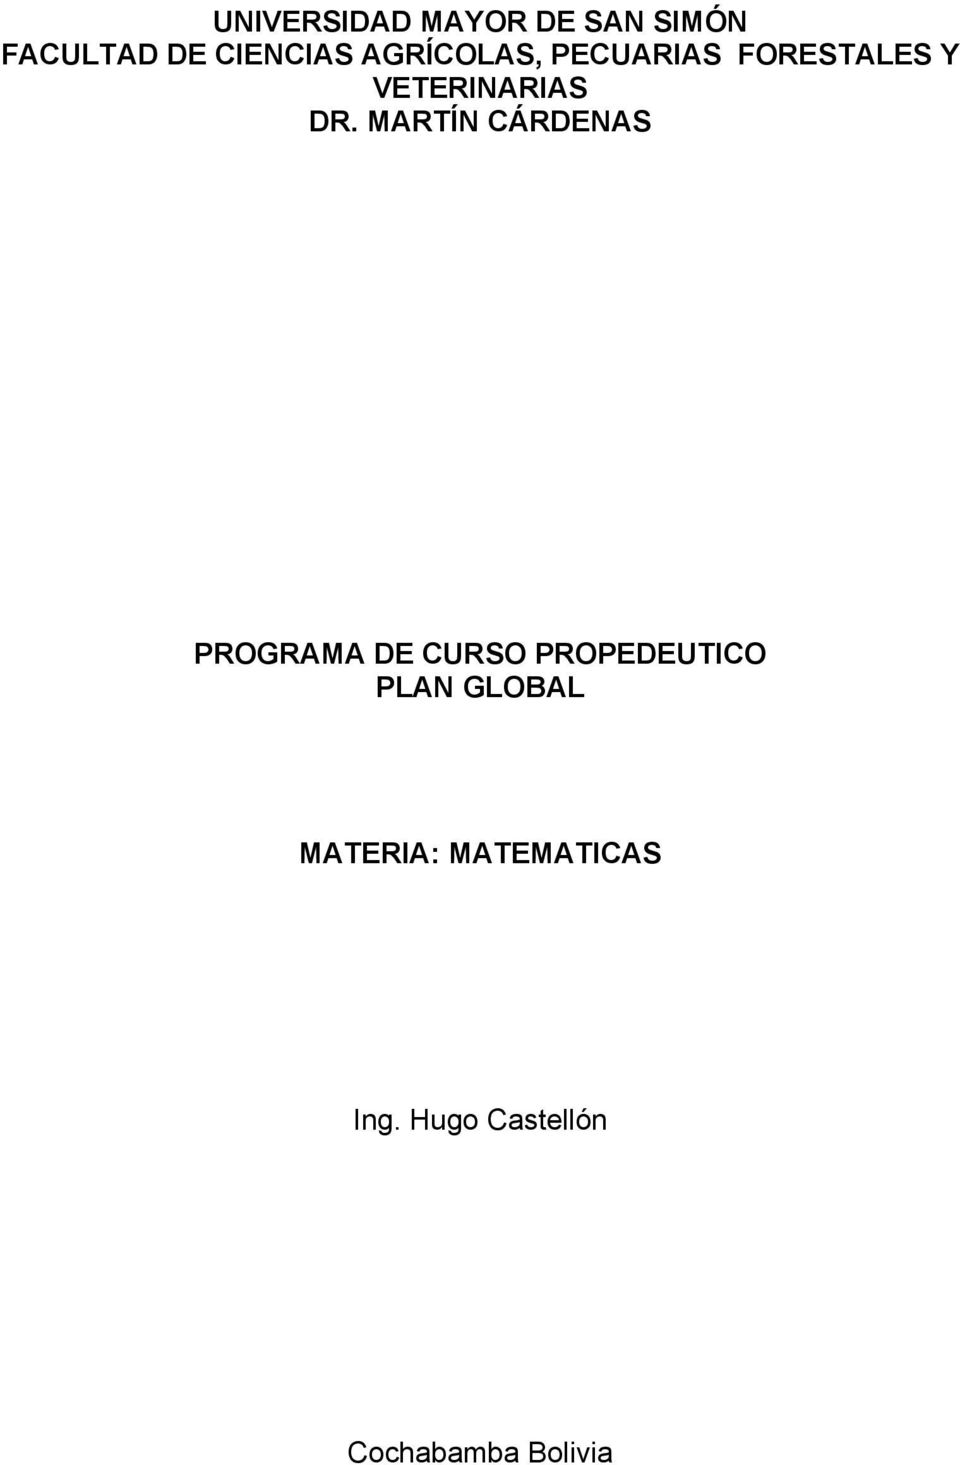 MARTÍN CÁRDENAS PROGRAMA DE CURSO PROPEDEUTICO PLAN